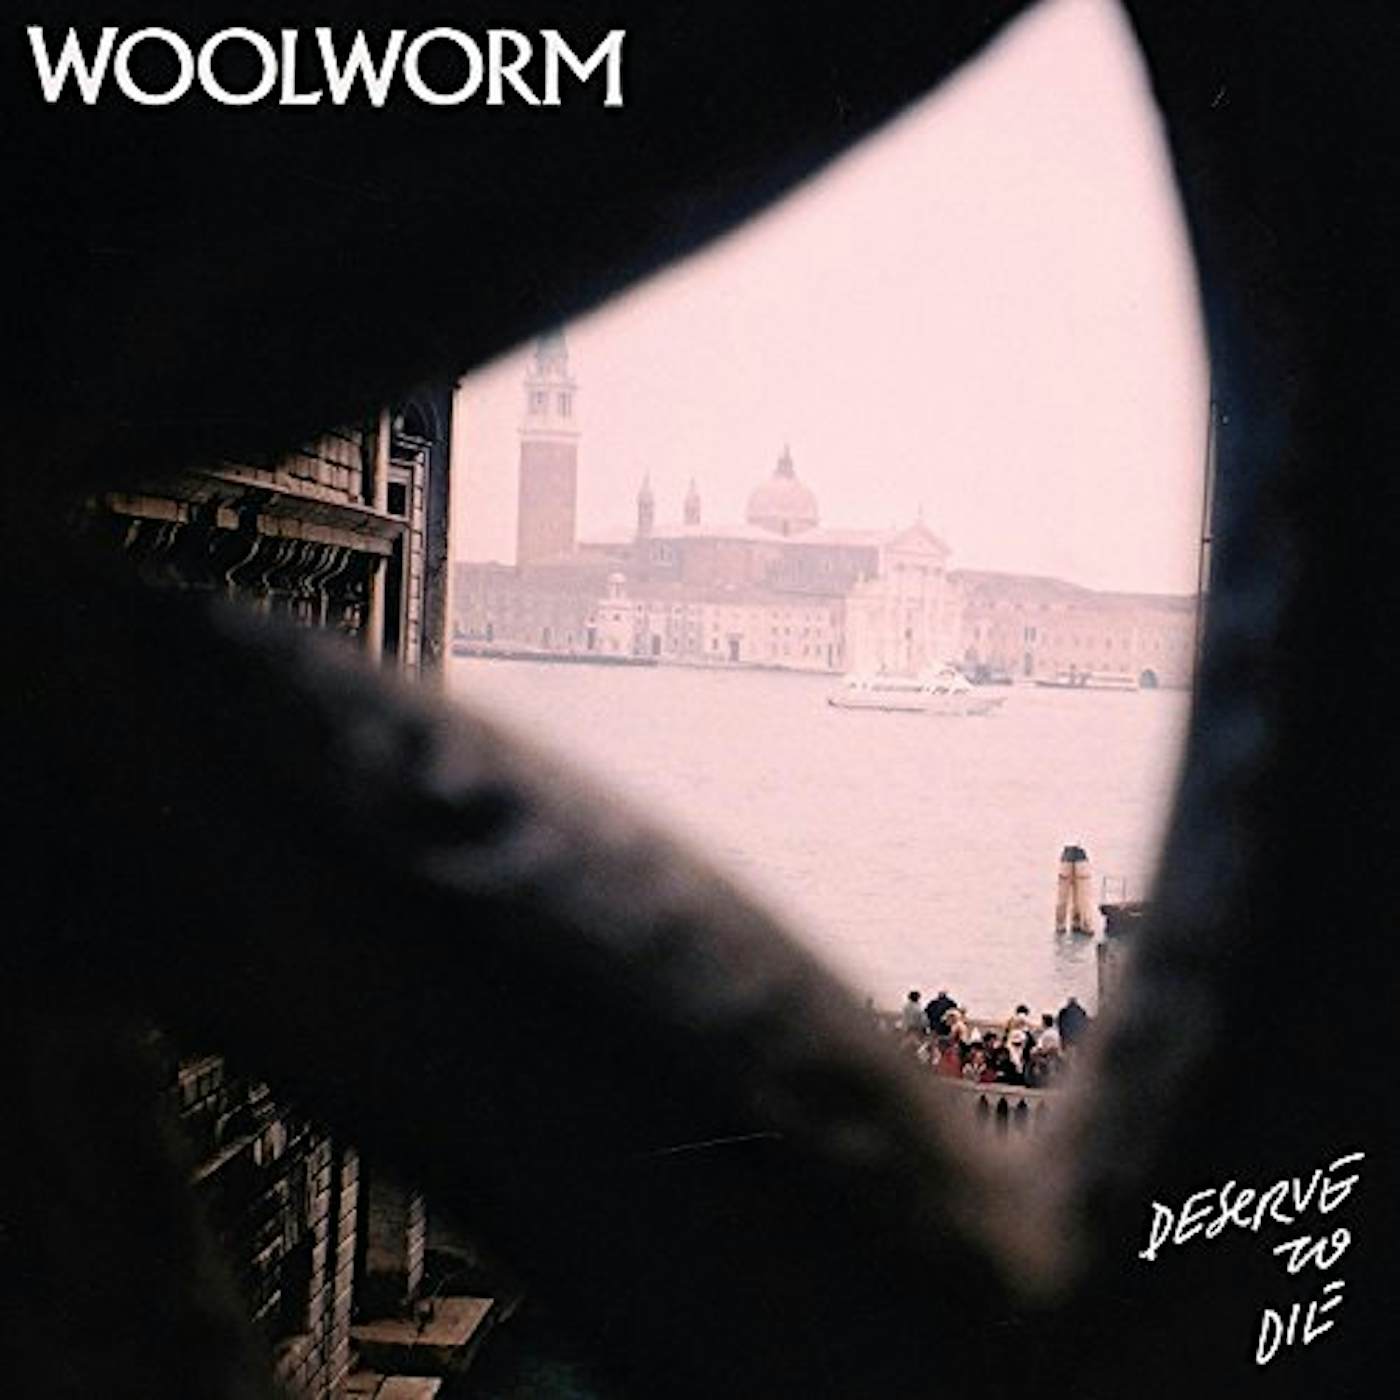 Woolworm Deserve to Die Vinyl Record